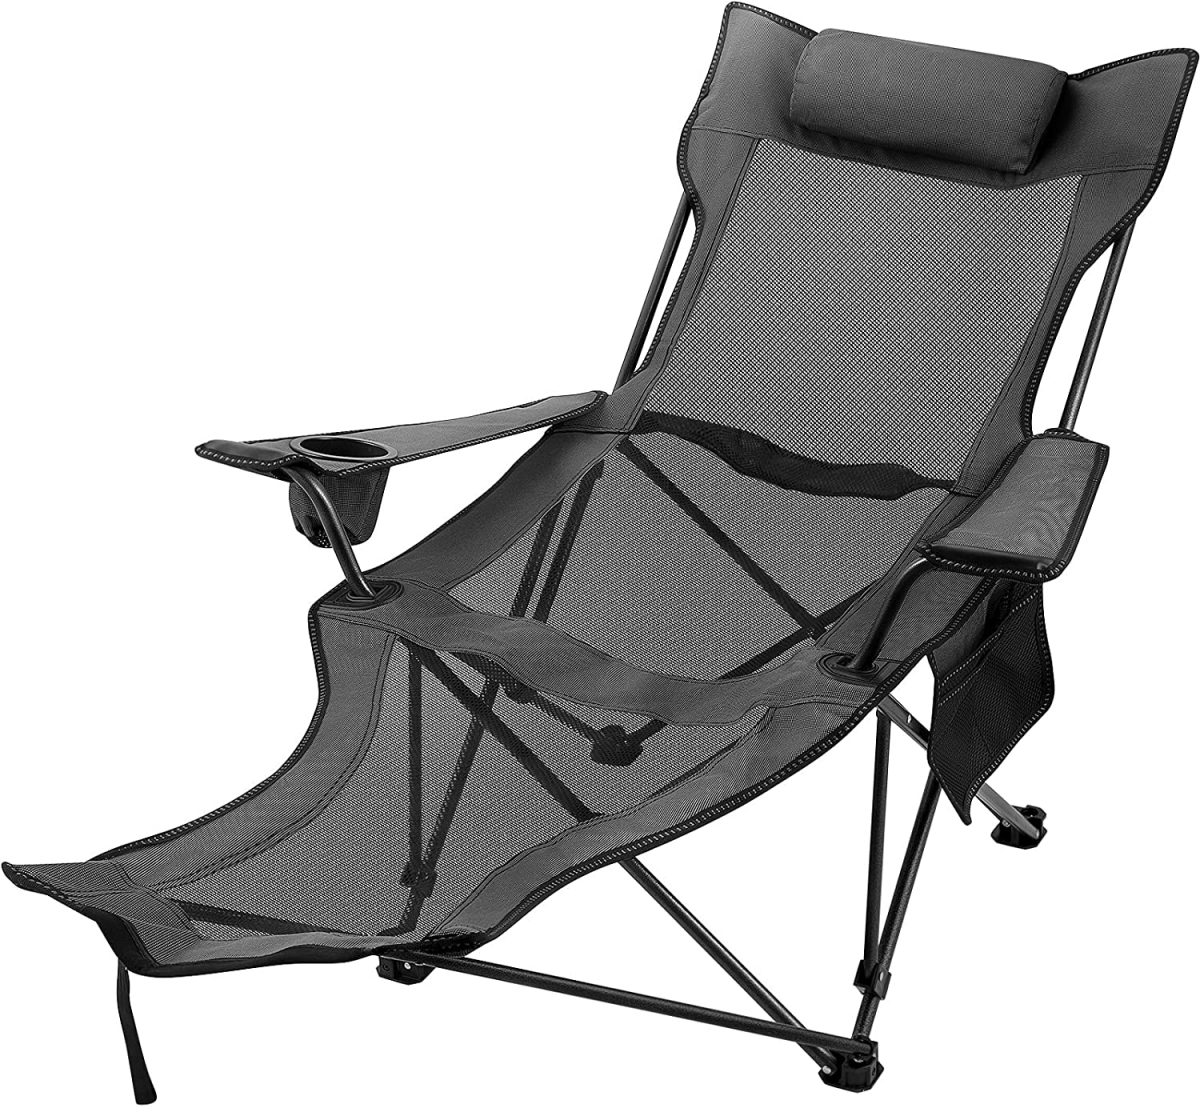 Happybuy Folding Camp Chair